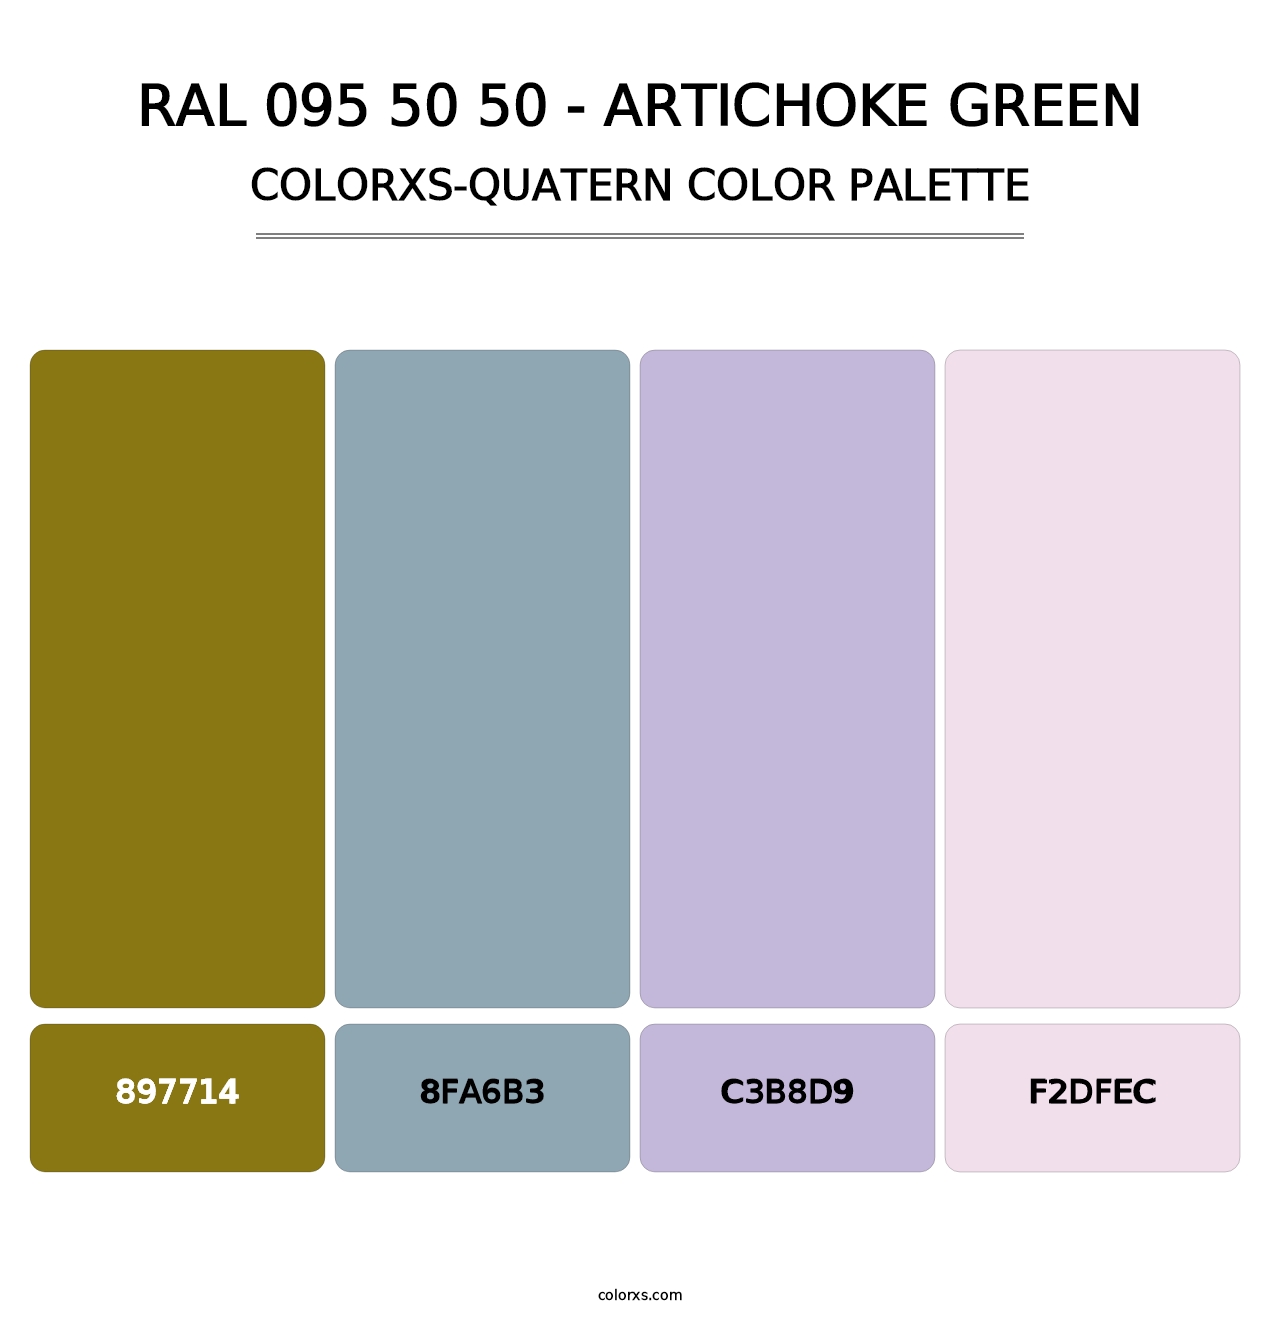 RAL 095 50 50 - Artichoke Green - Colorxs Quatern Palette